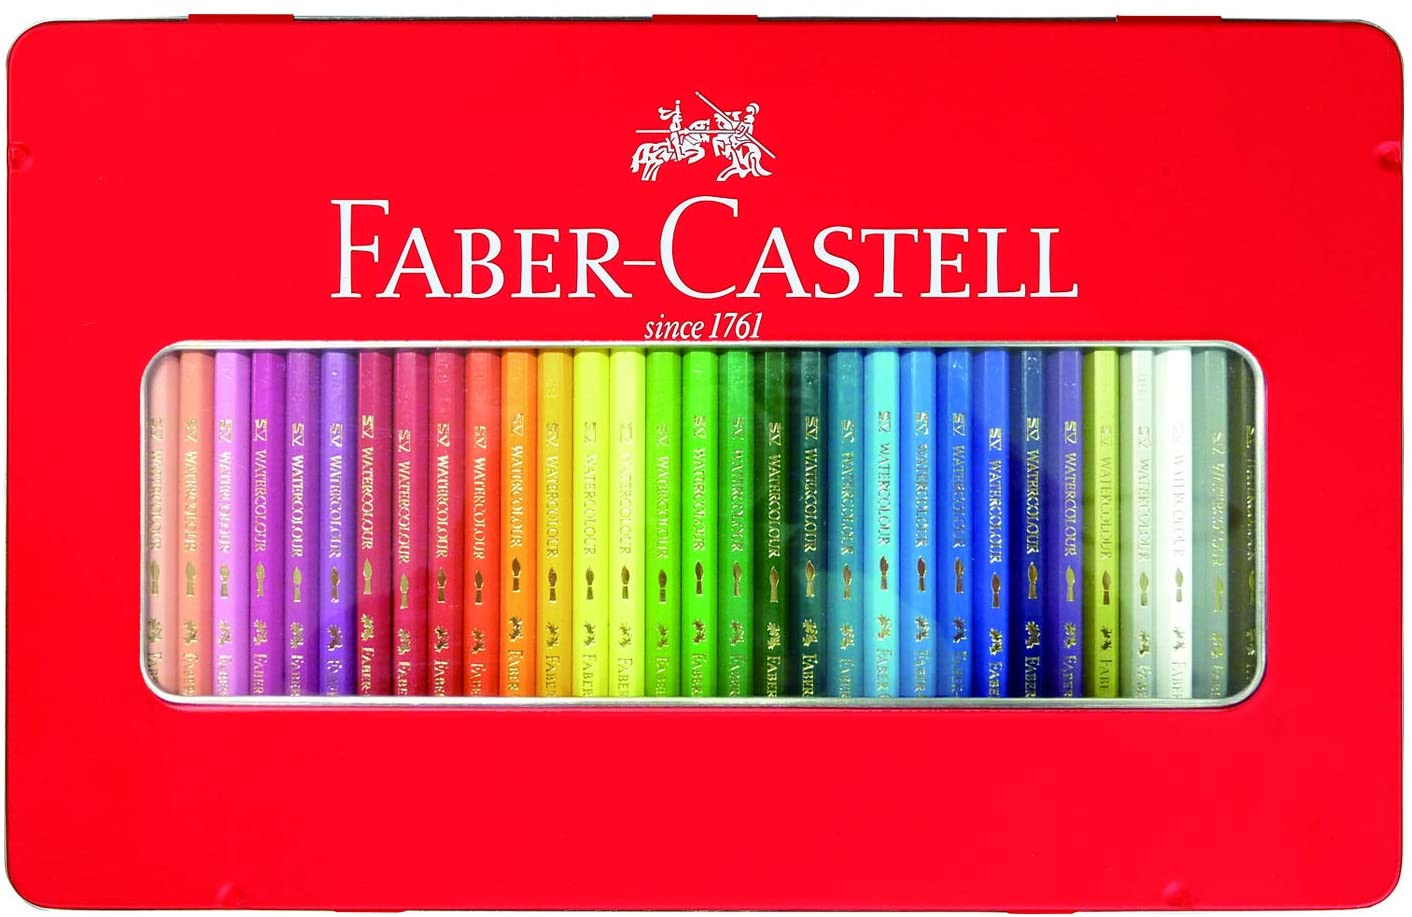 [Shachihata] [Mail] Faber-Castell watercolor colored pencils 36 colors TFC-WCP36C